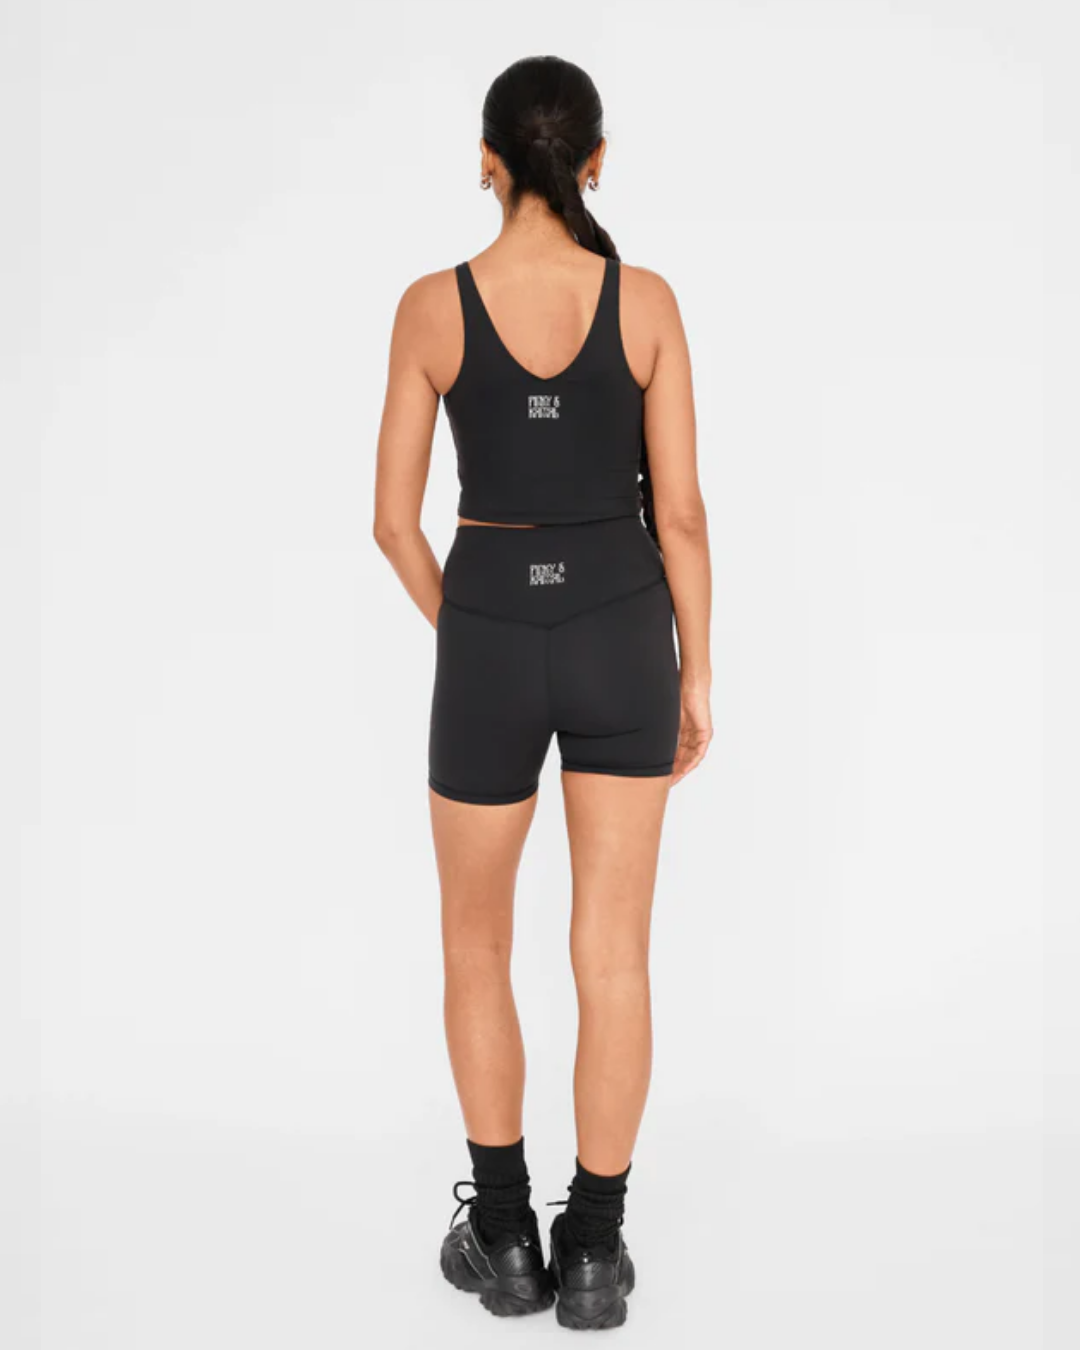 Sprint Short - Black Activewear by Pinky & Kamal - Prae Wellness